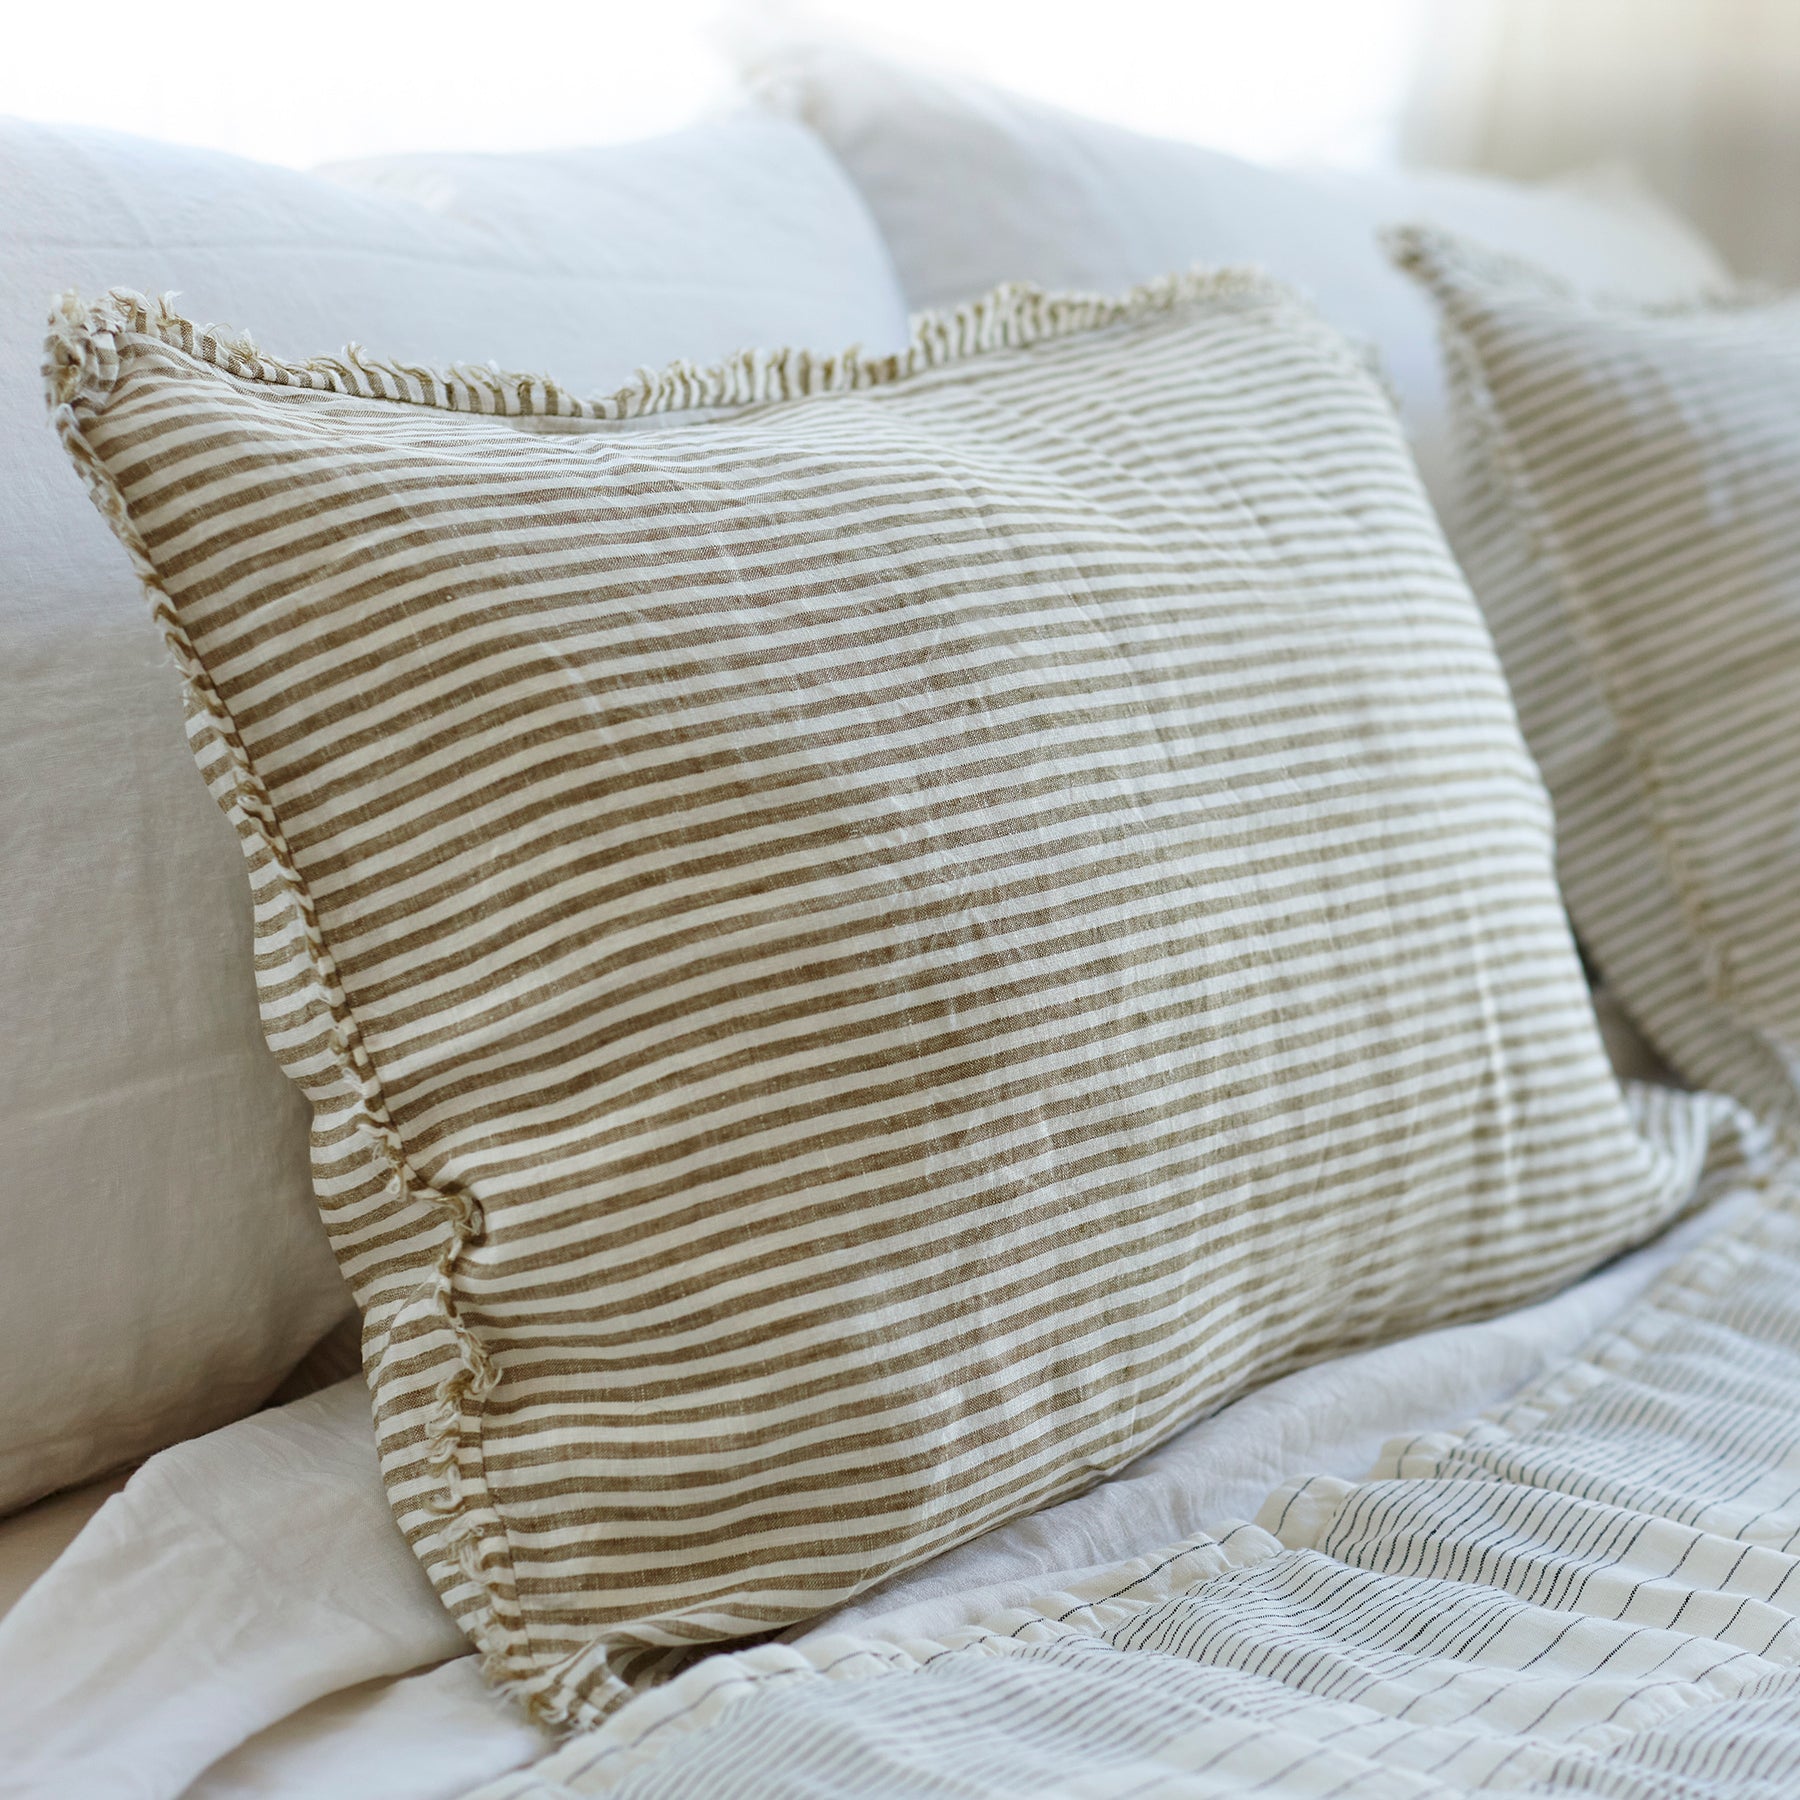 Pair of Linen Pillowcases in Olive Stripe